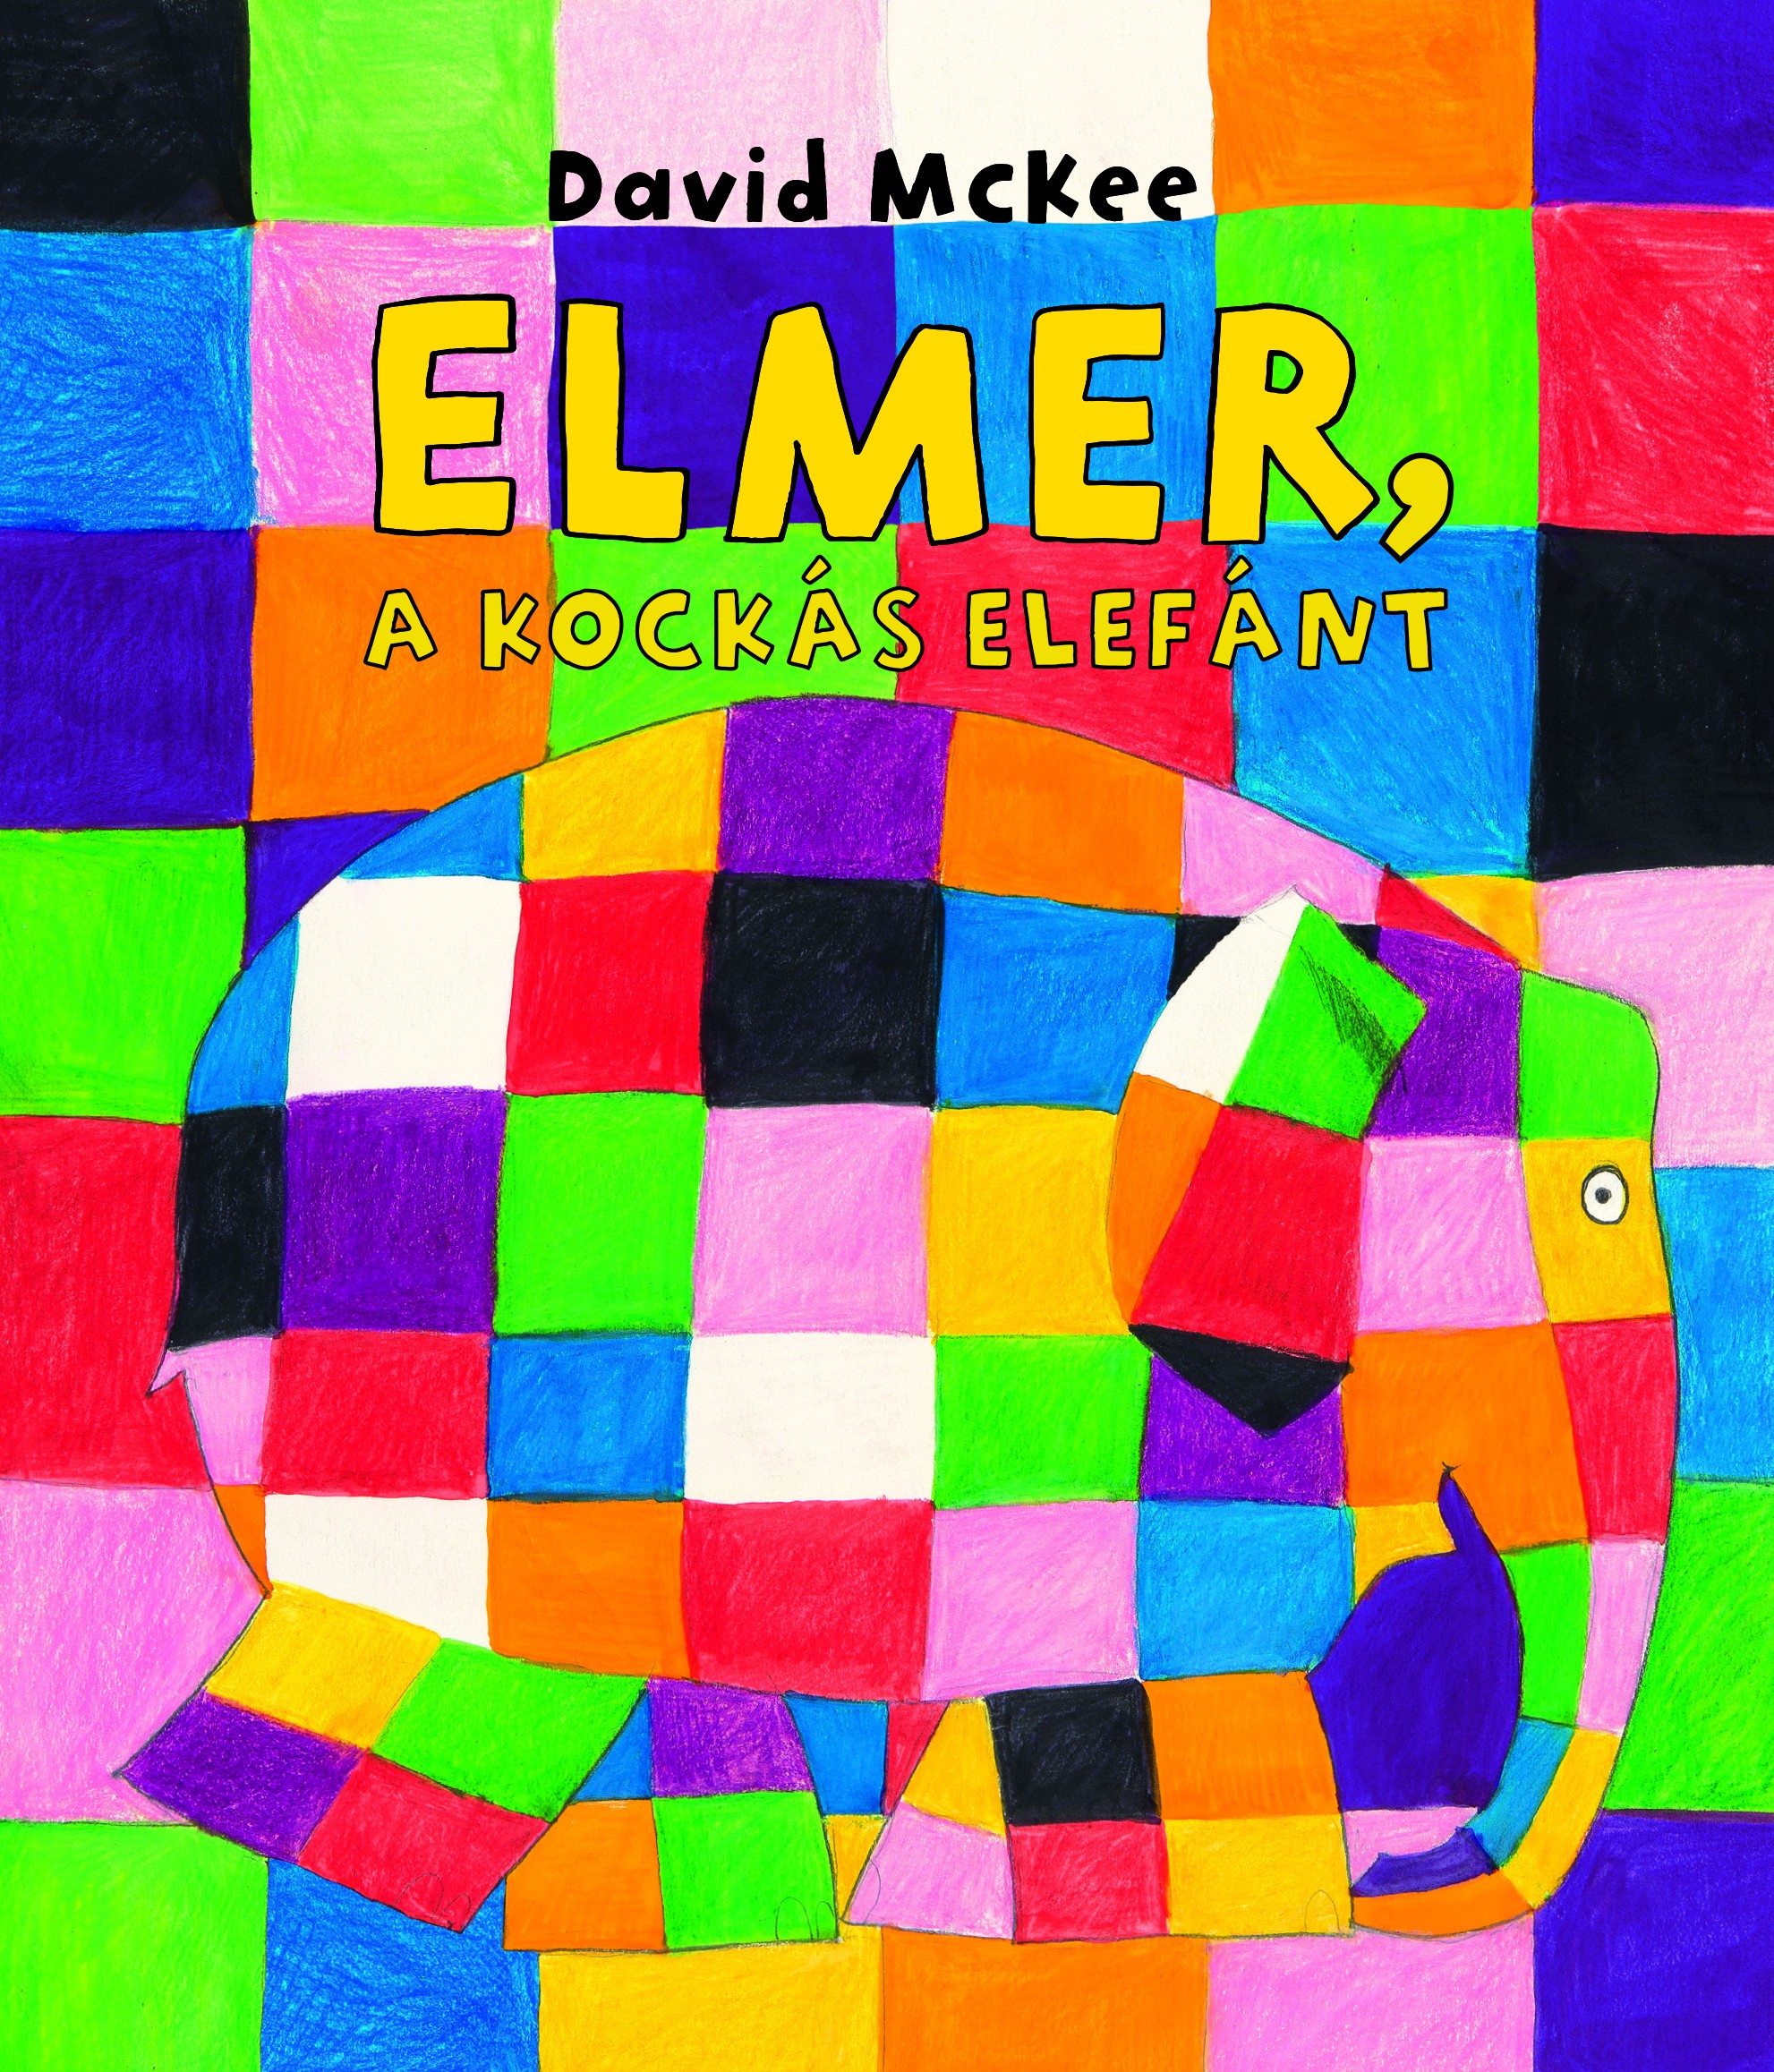 Elmer, a kocks elefnt